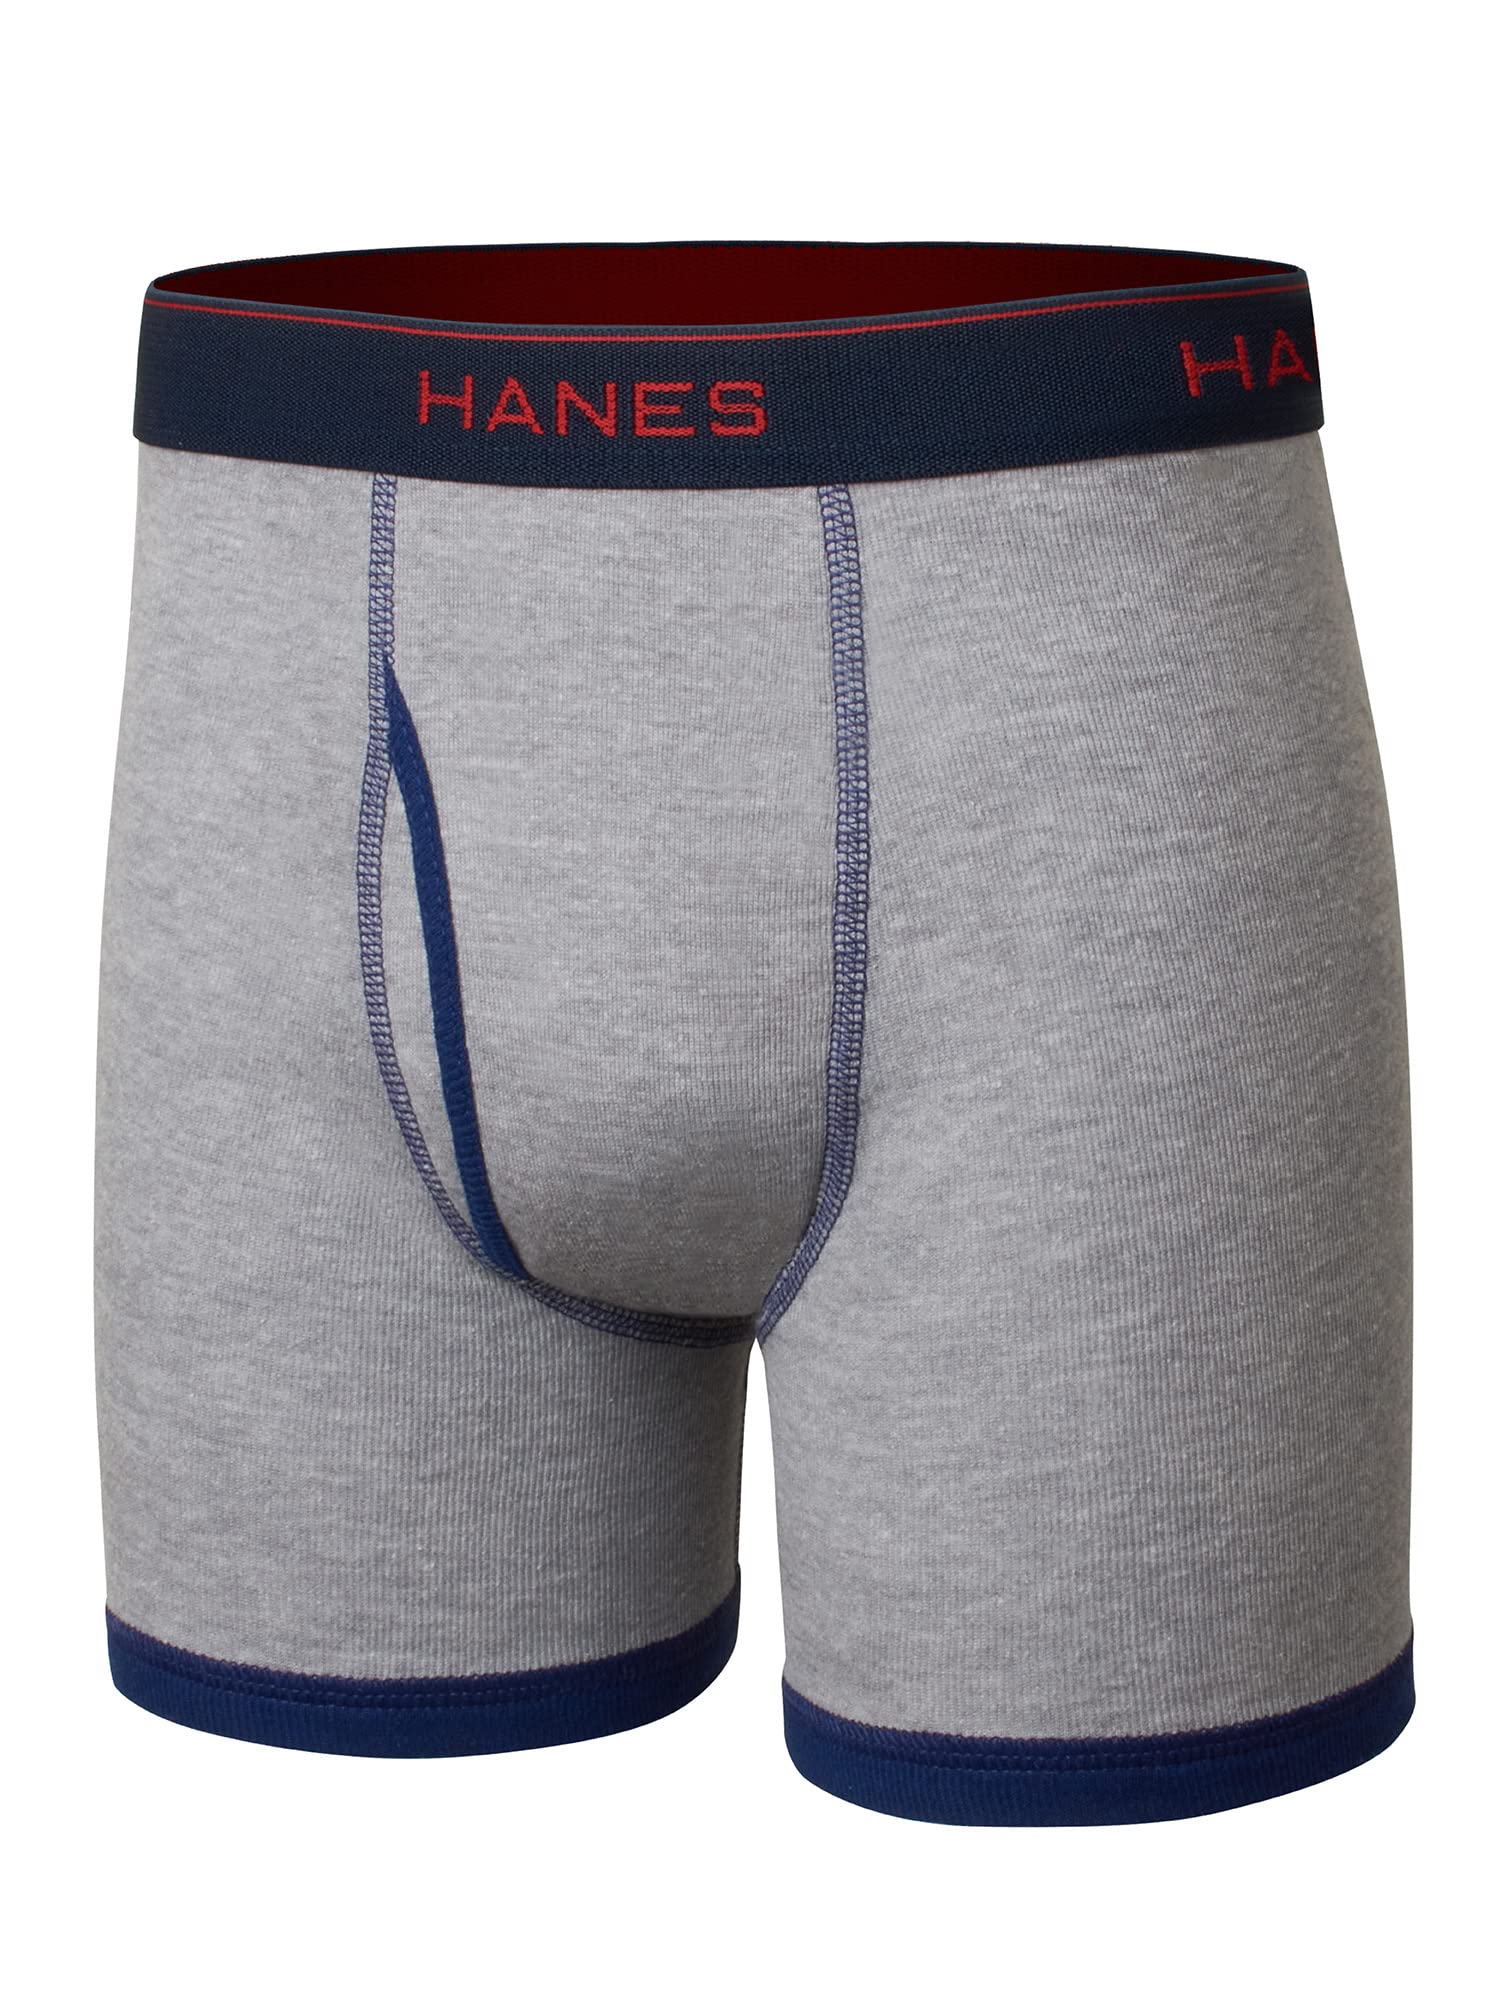 Hanes Boys' Comfort Flex Fit Sport Ringer Boxer Briefs, Multiple Packs Available